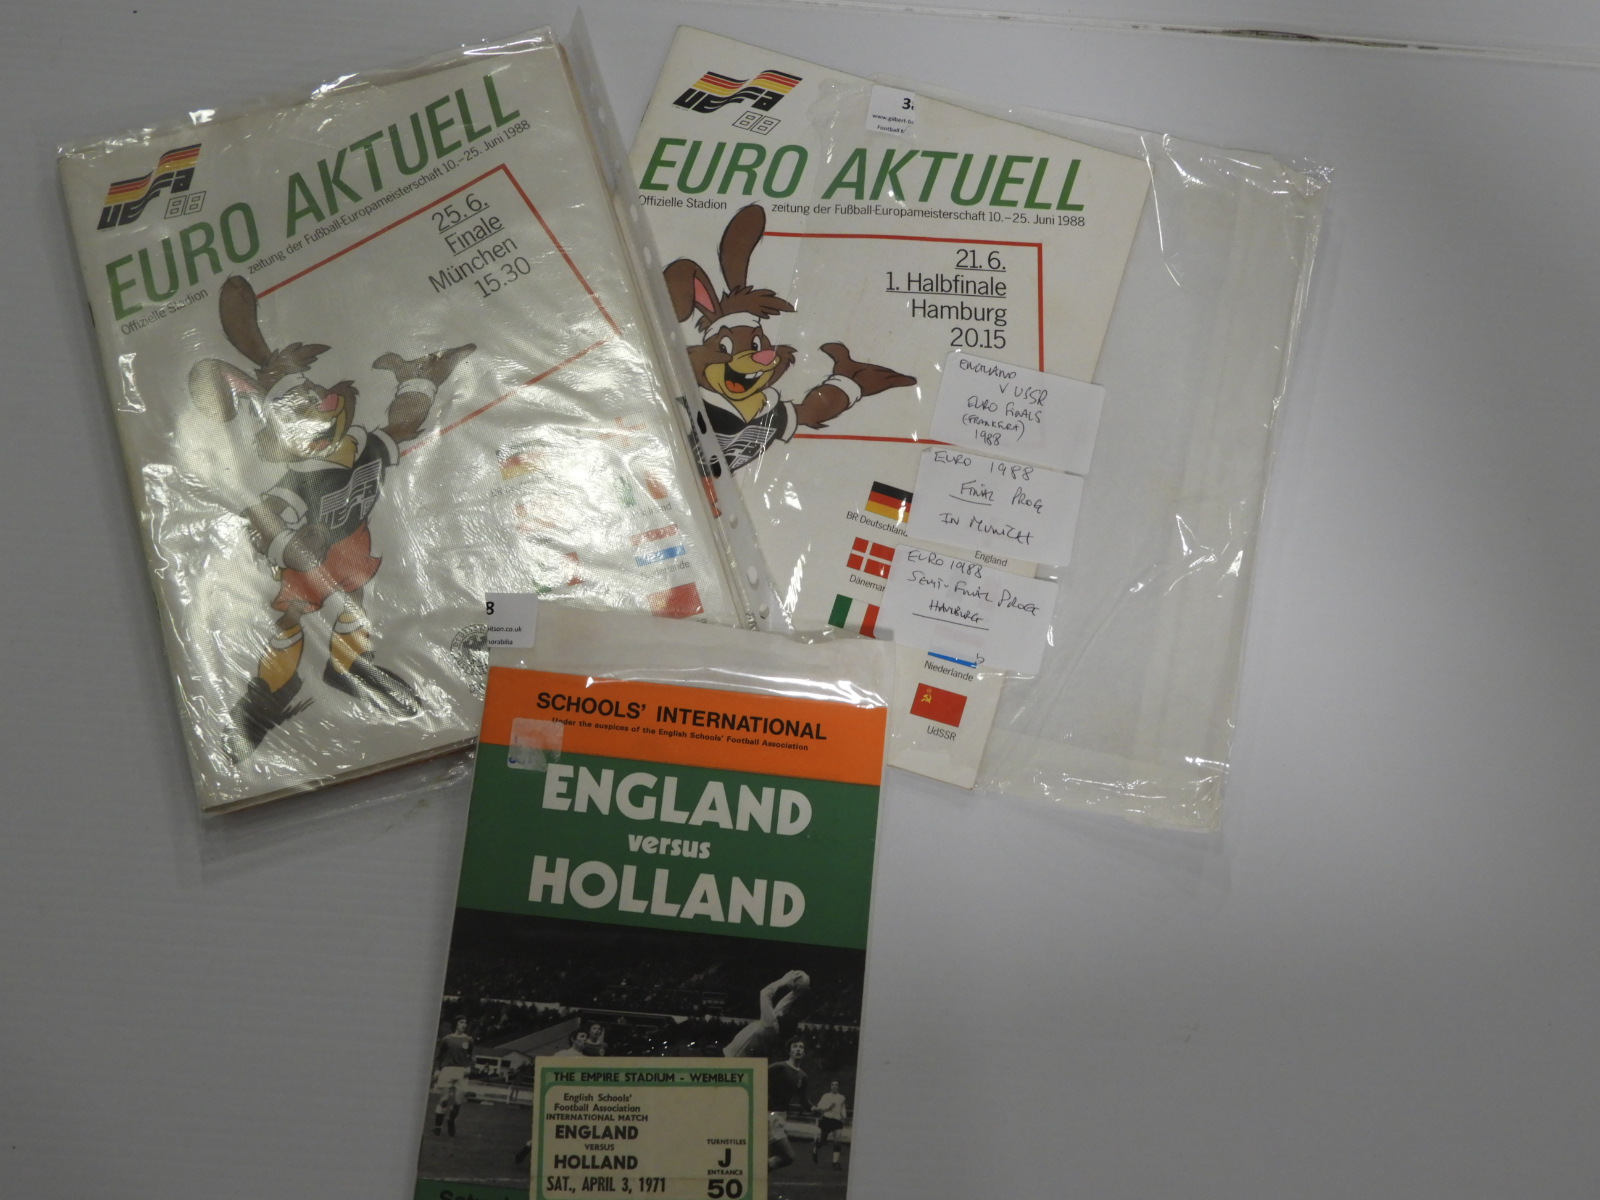 Schools International England vs Holland Ticket at Wembley 1971 and Ticket